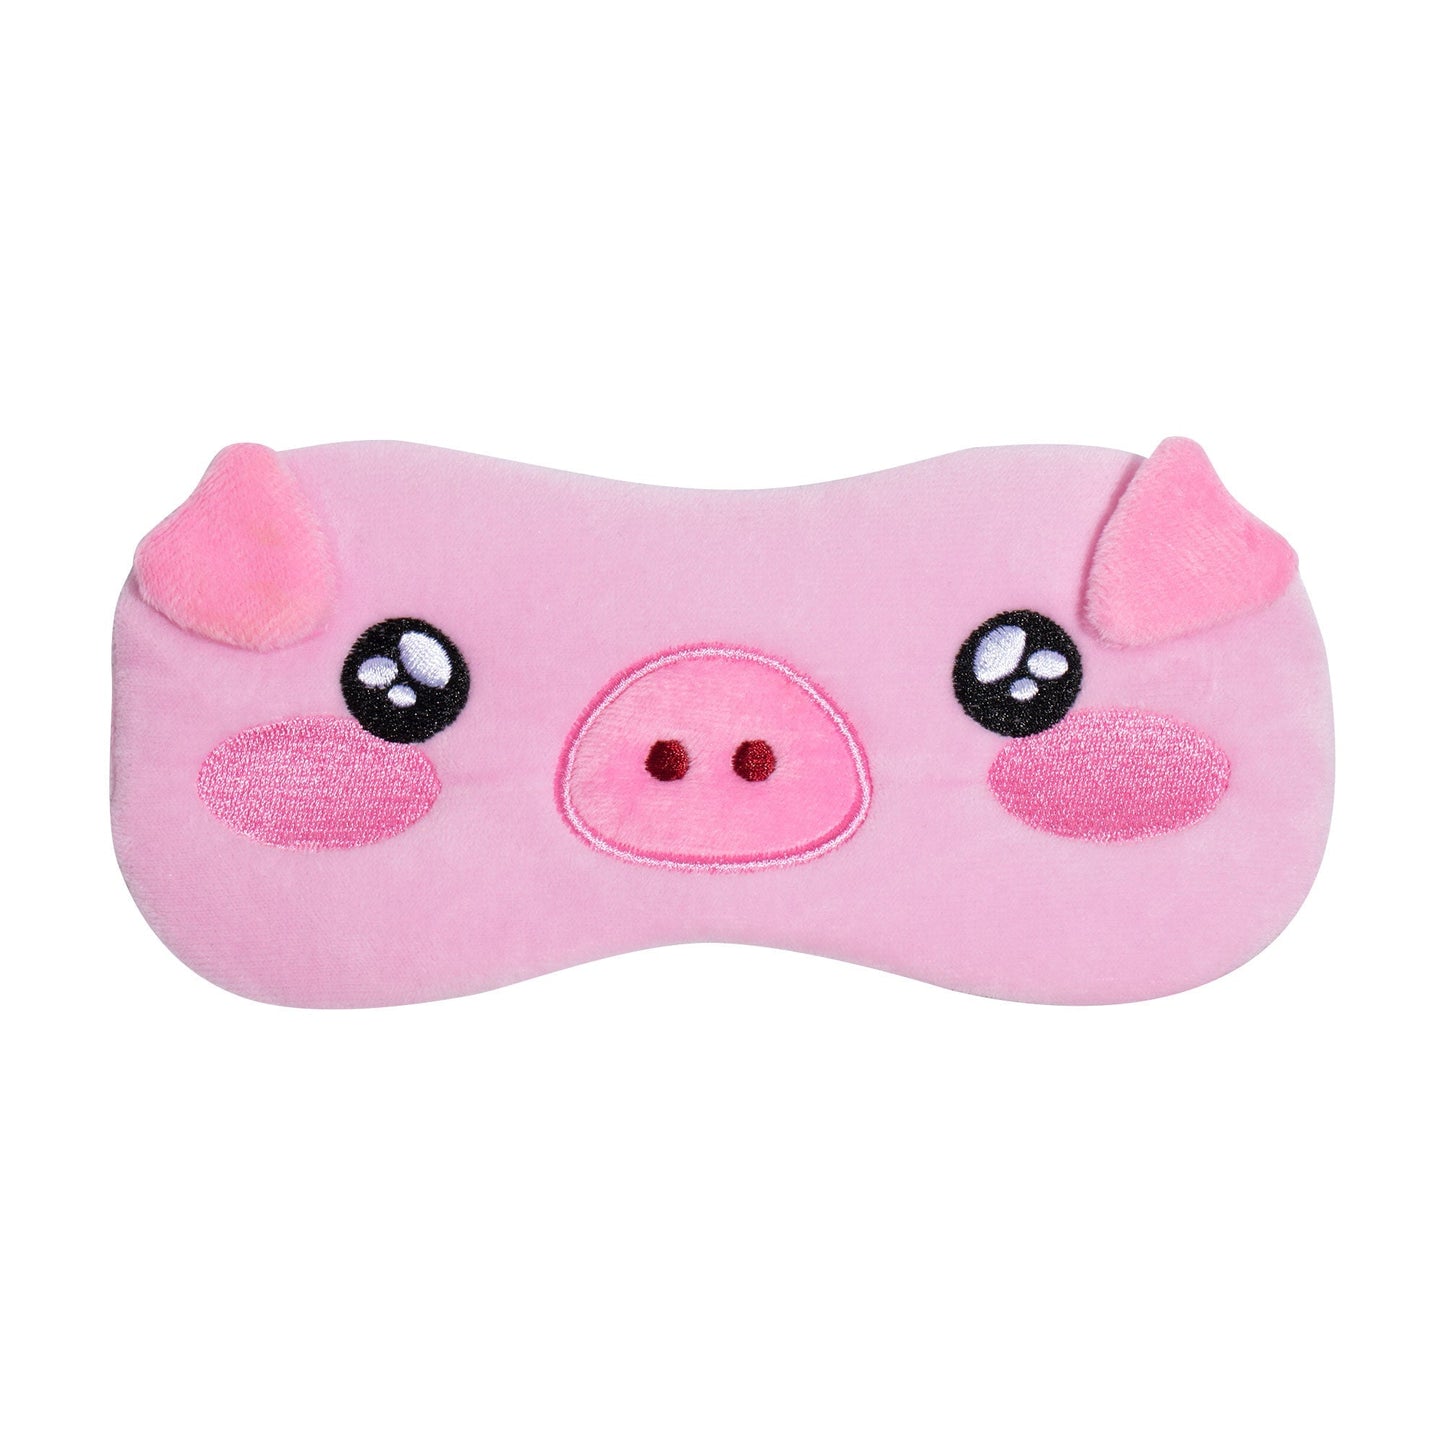 Peaceful Piggy Plush Sleep Mask Sleep Masks The Crème Shop 